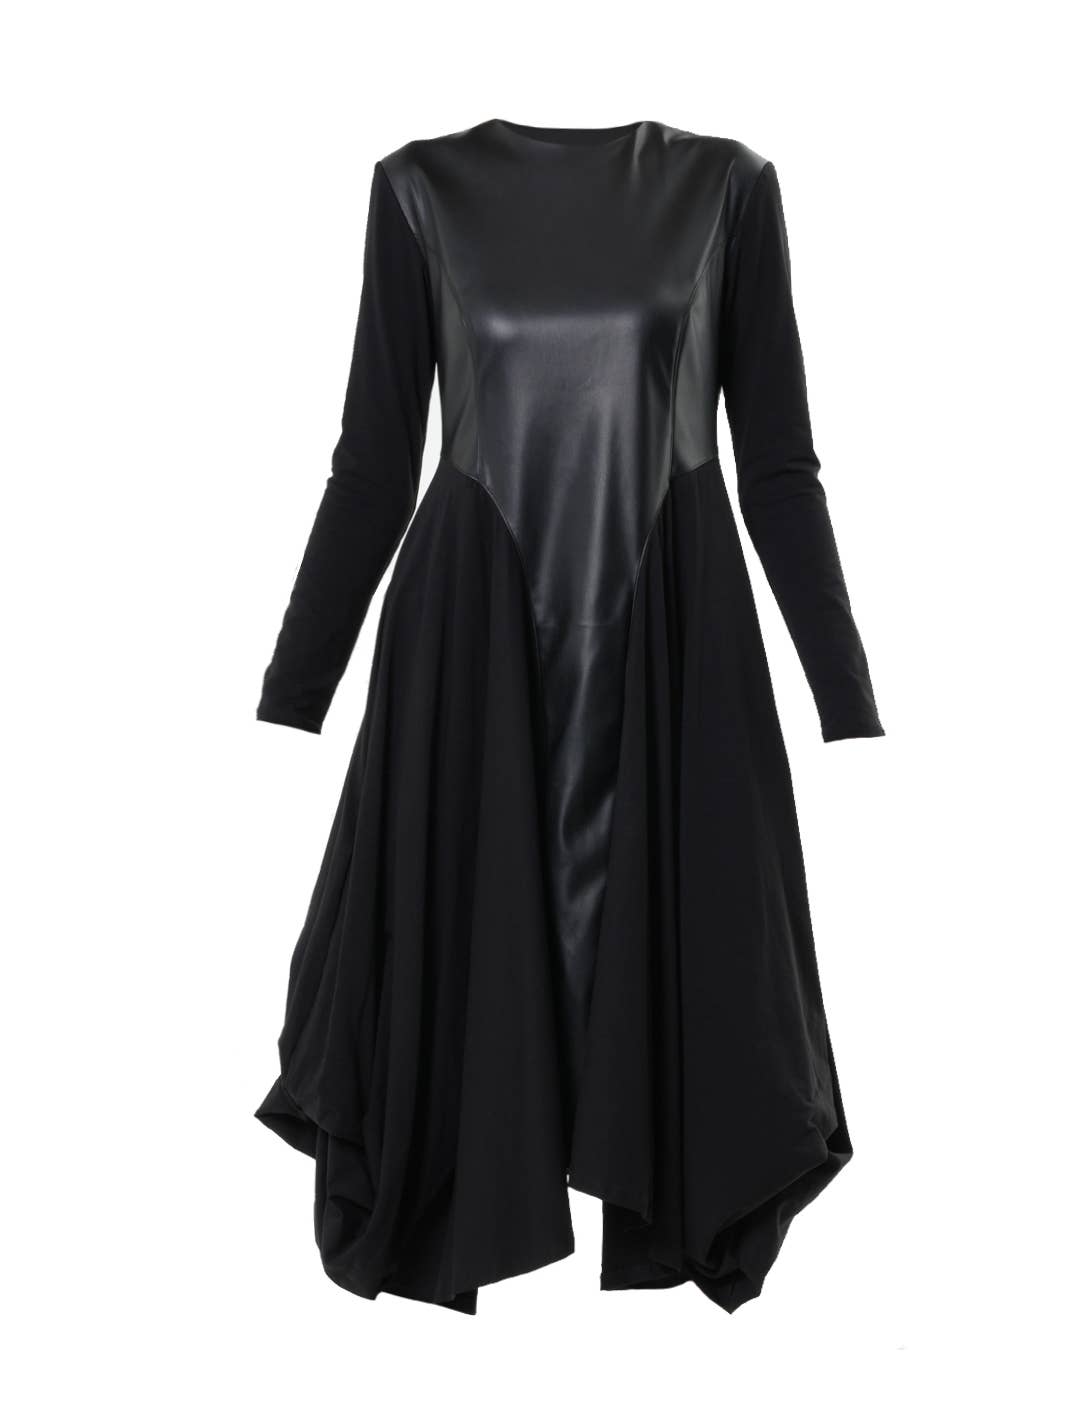 Black Asymmetric Leather Dress - Above The Crowd Boutique